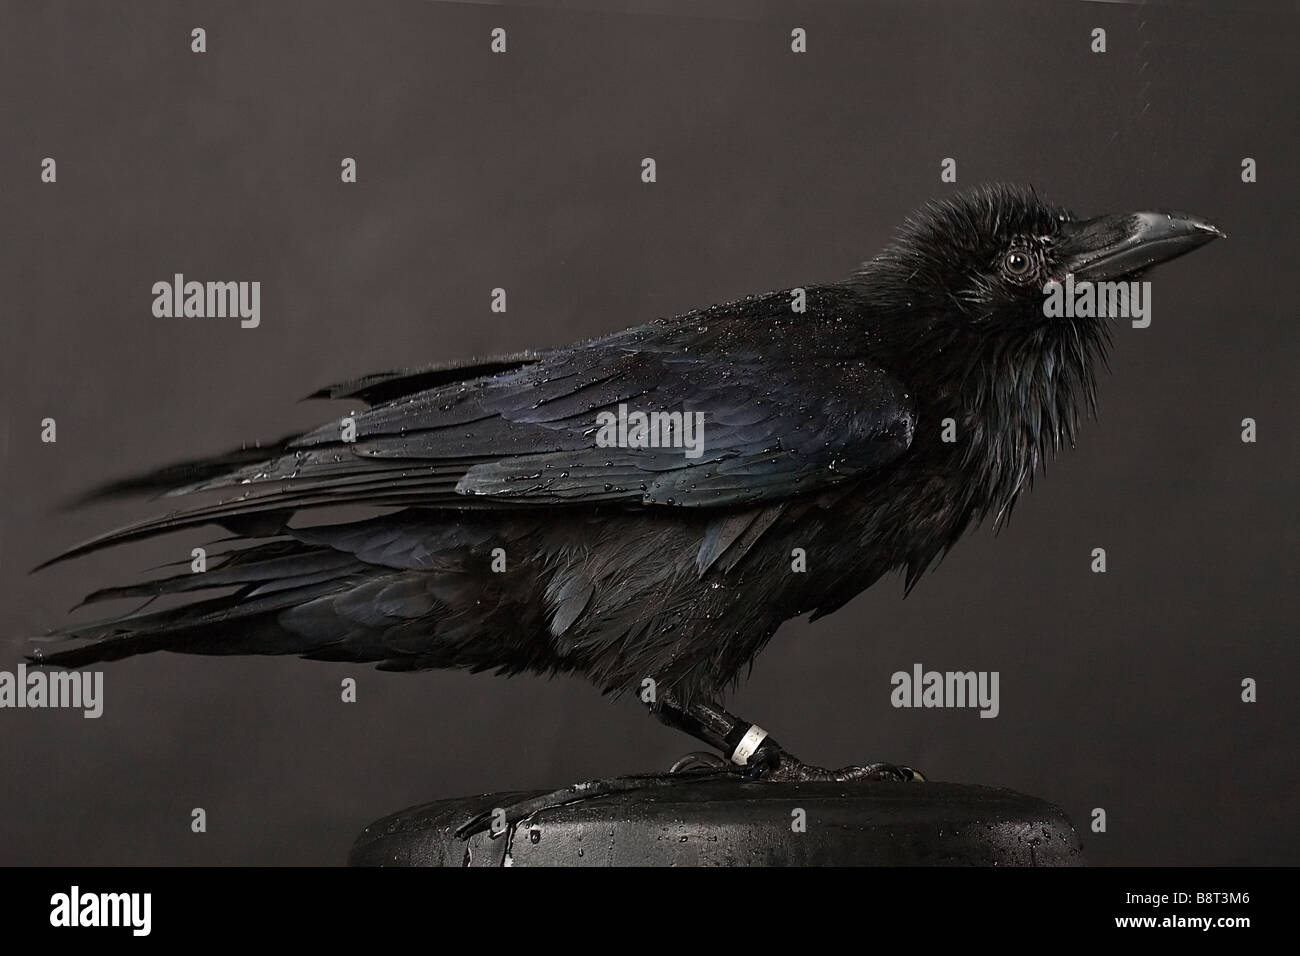 big black raven close up portrait on grey background Stock Photo